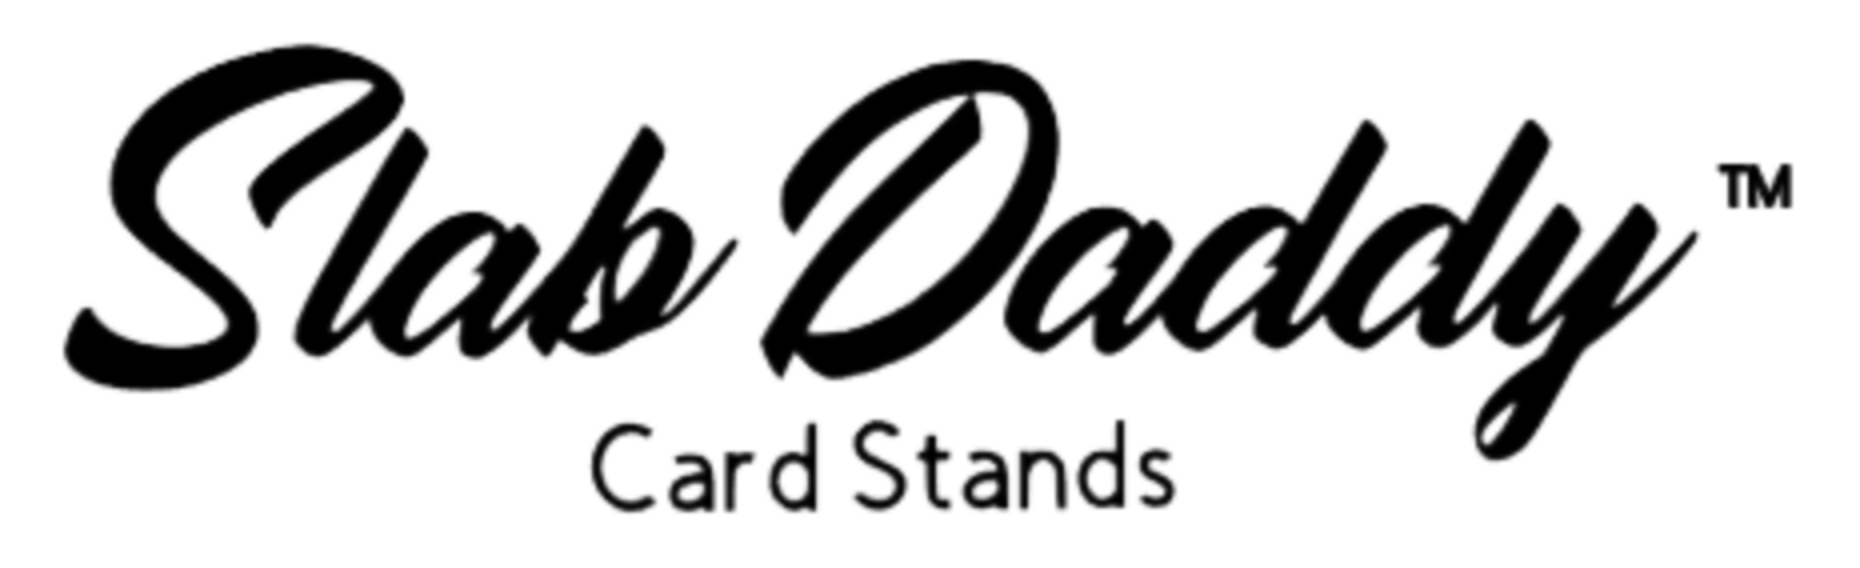 Slab Daddy Card Stands